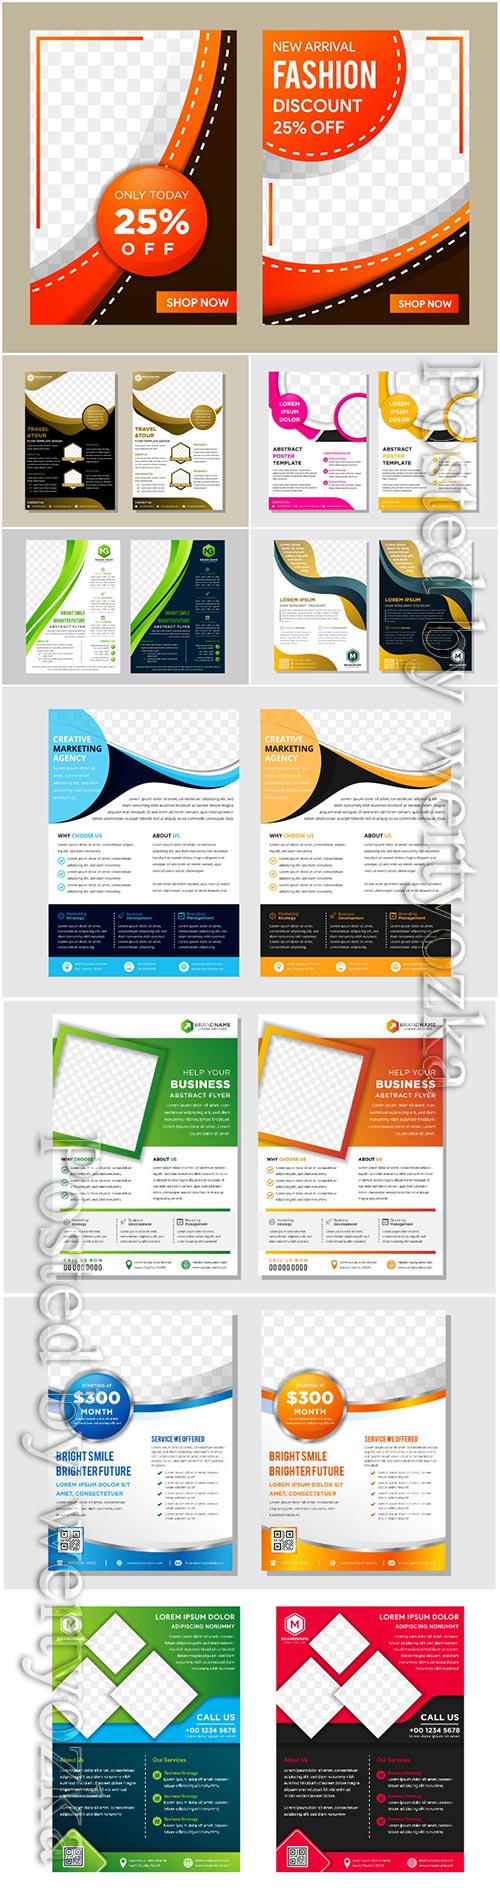 Design vector template for brochure, flyer, magazine